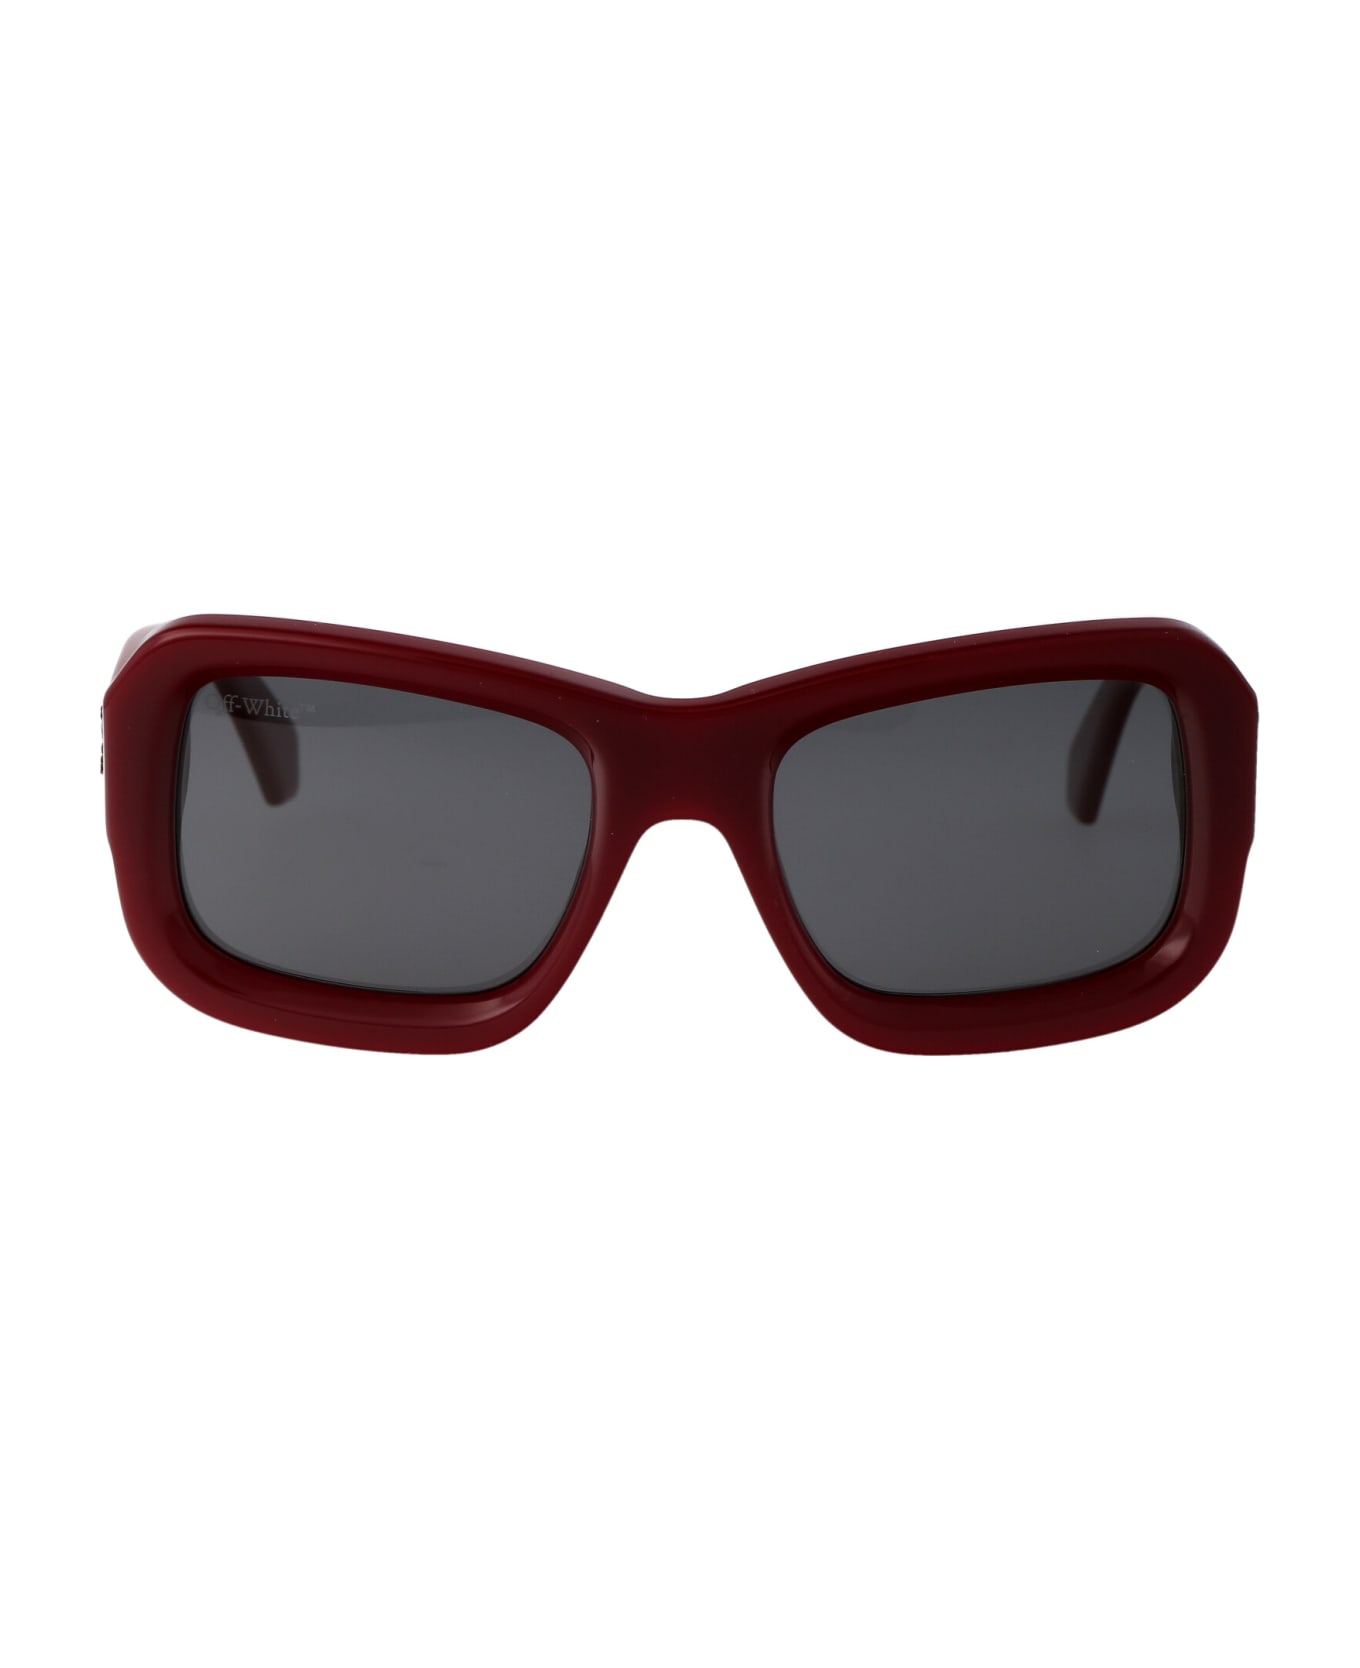 Off-White Verona Sunglasses - 2707 BURGUNDY サングラス